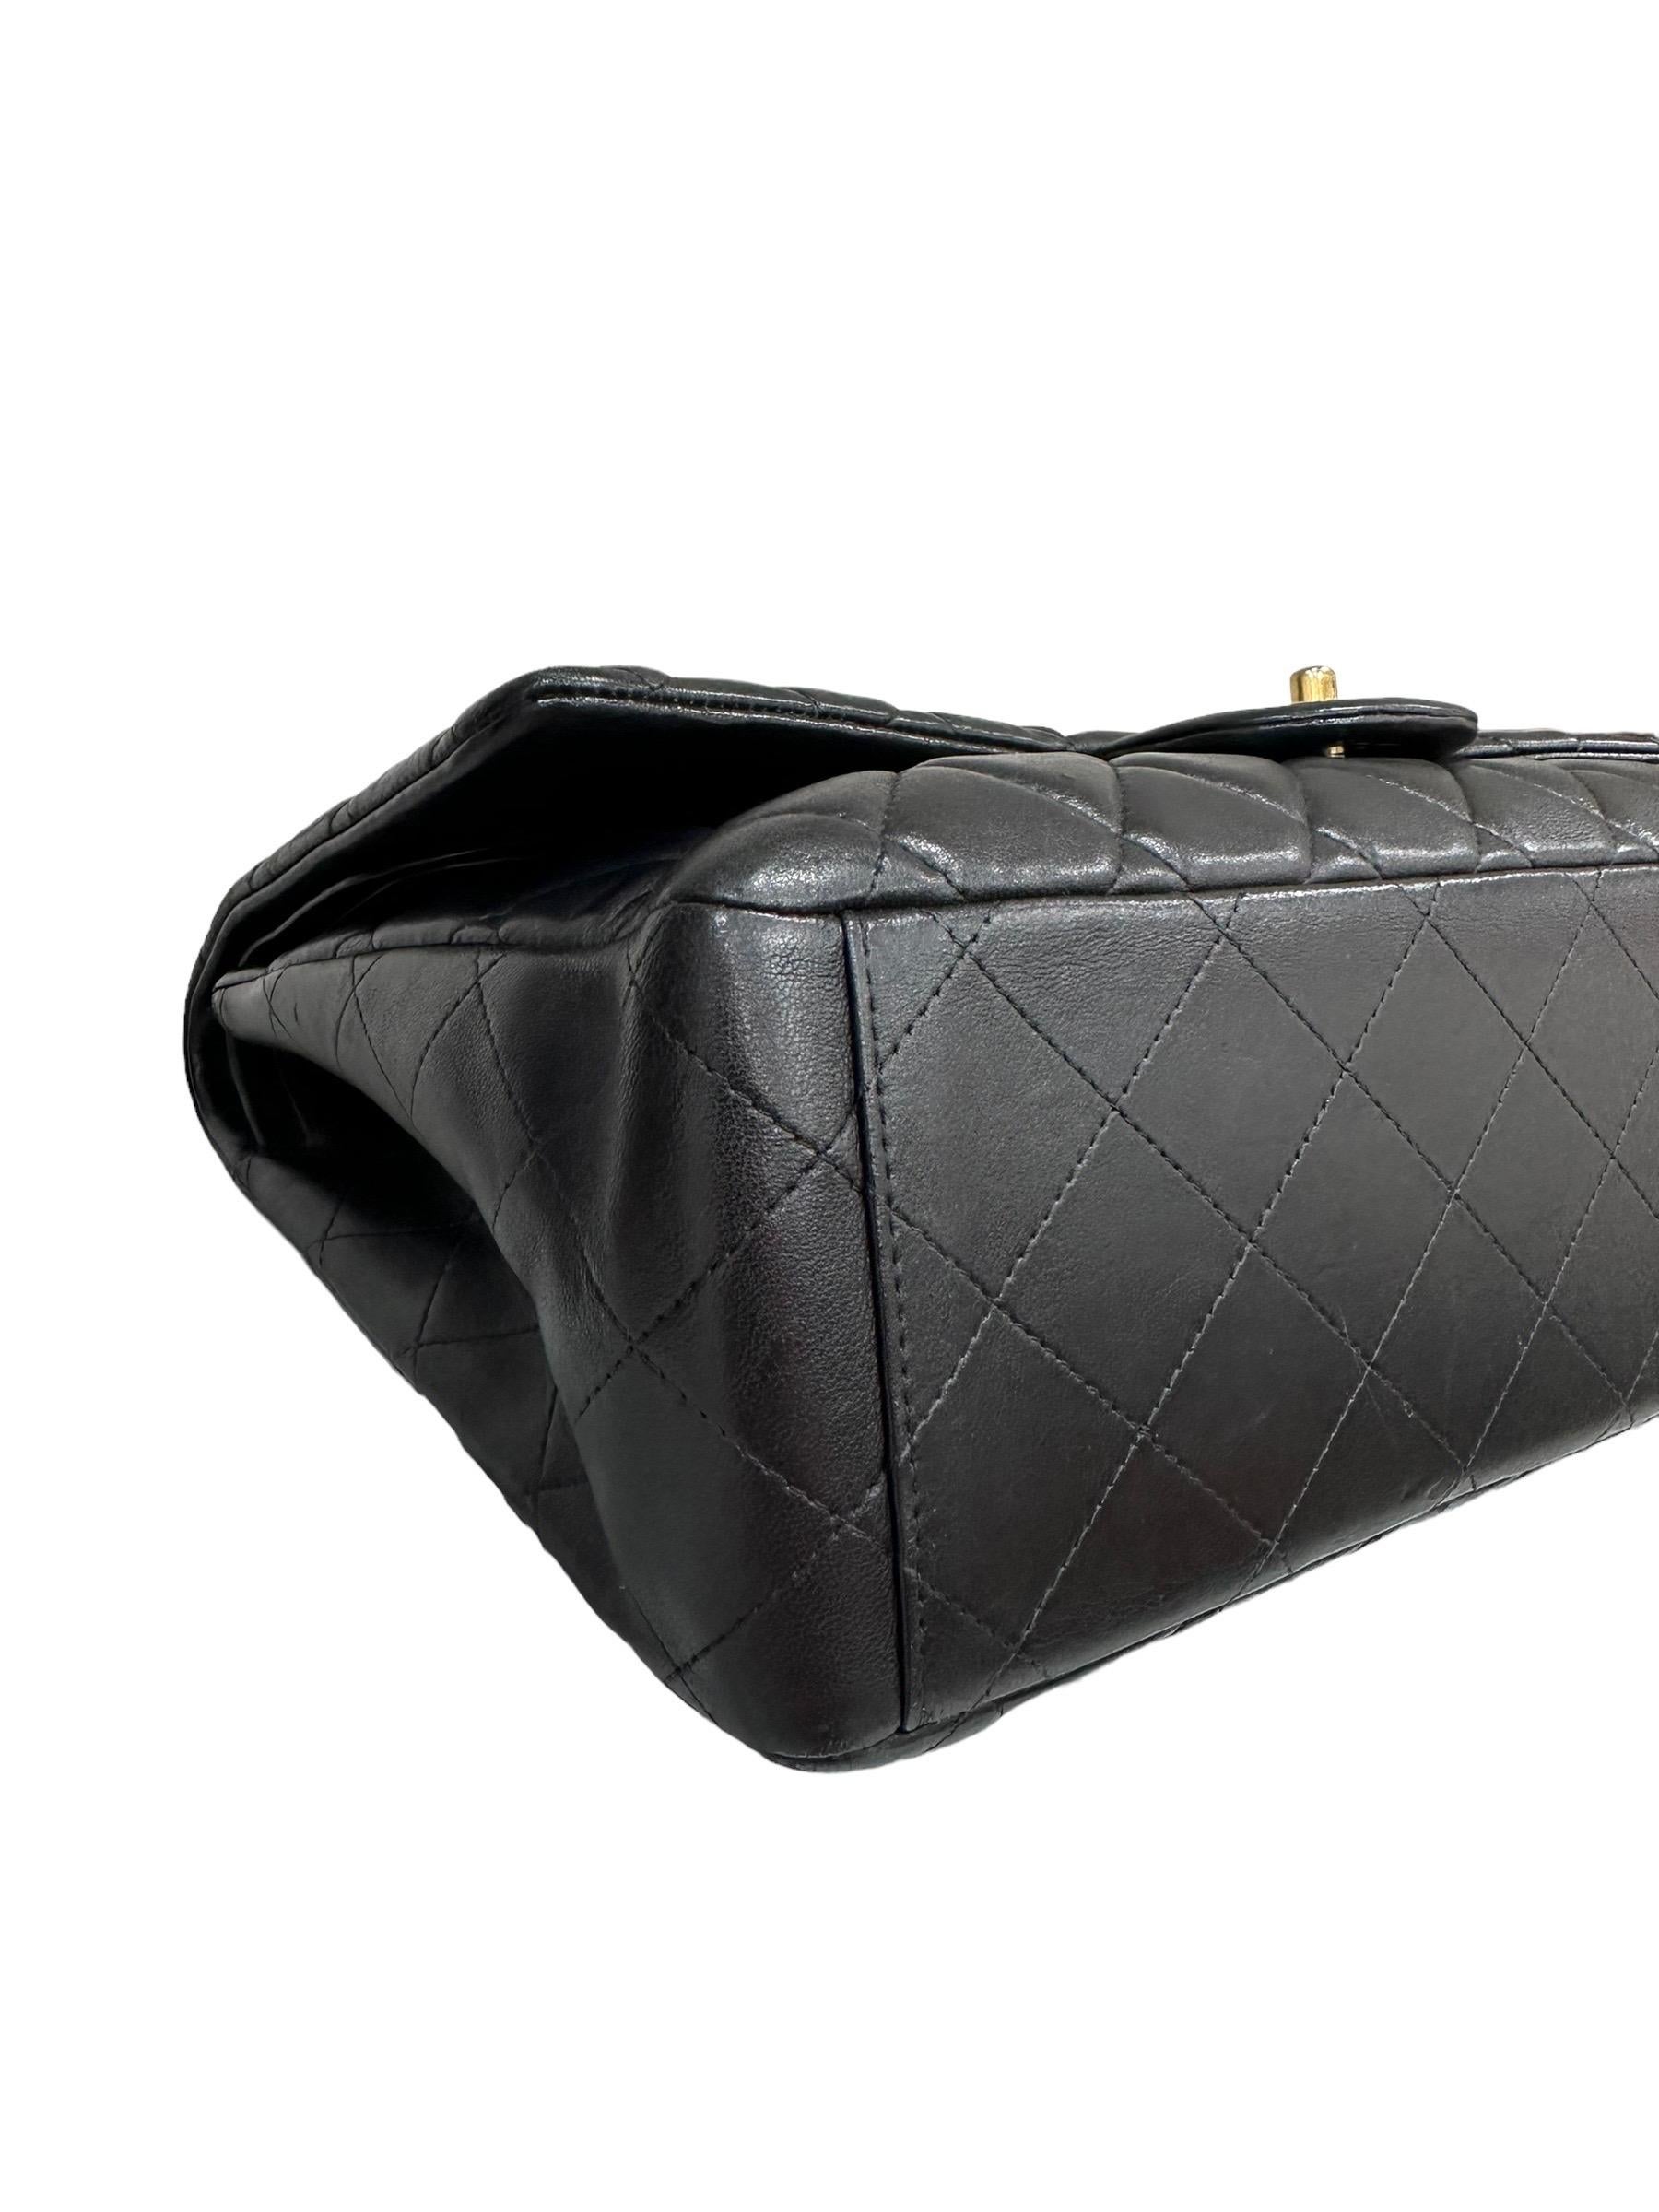 2011 Chanel Timeless Maxi Jumbo Black Leather Top Shoulder Bag For Sale 6